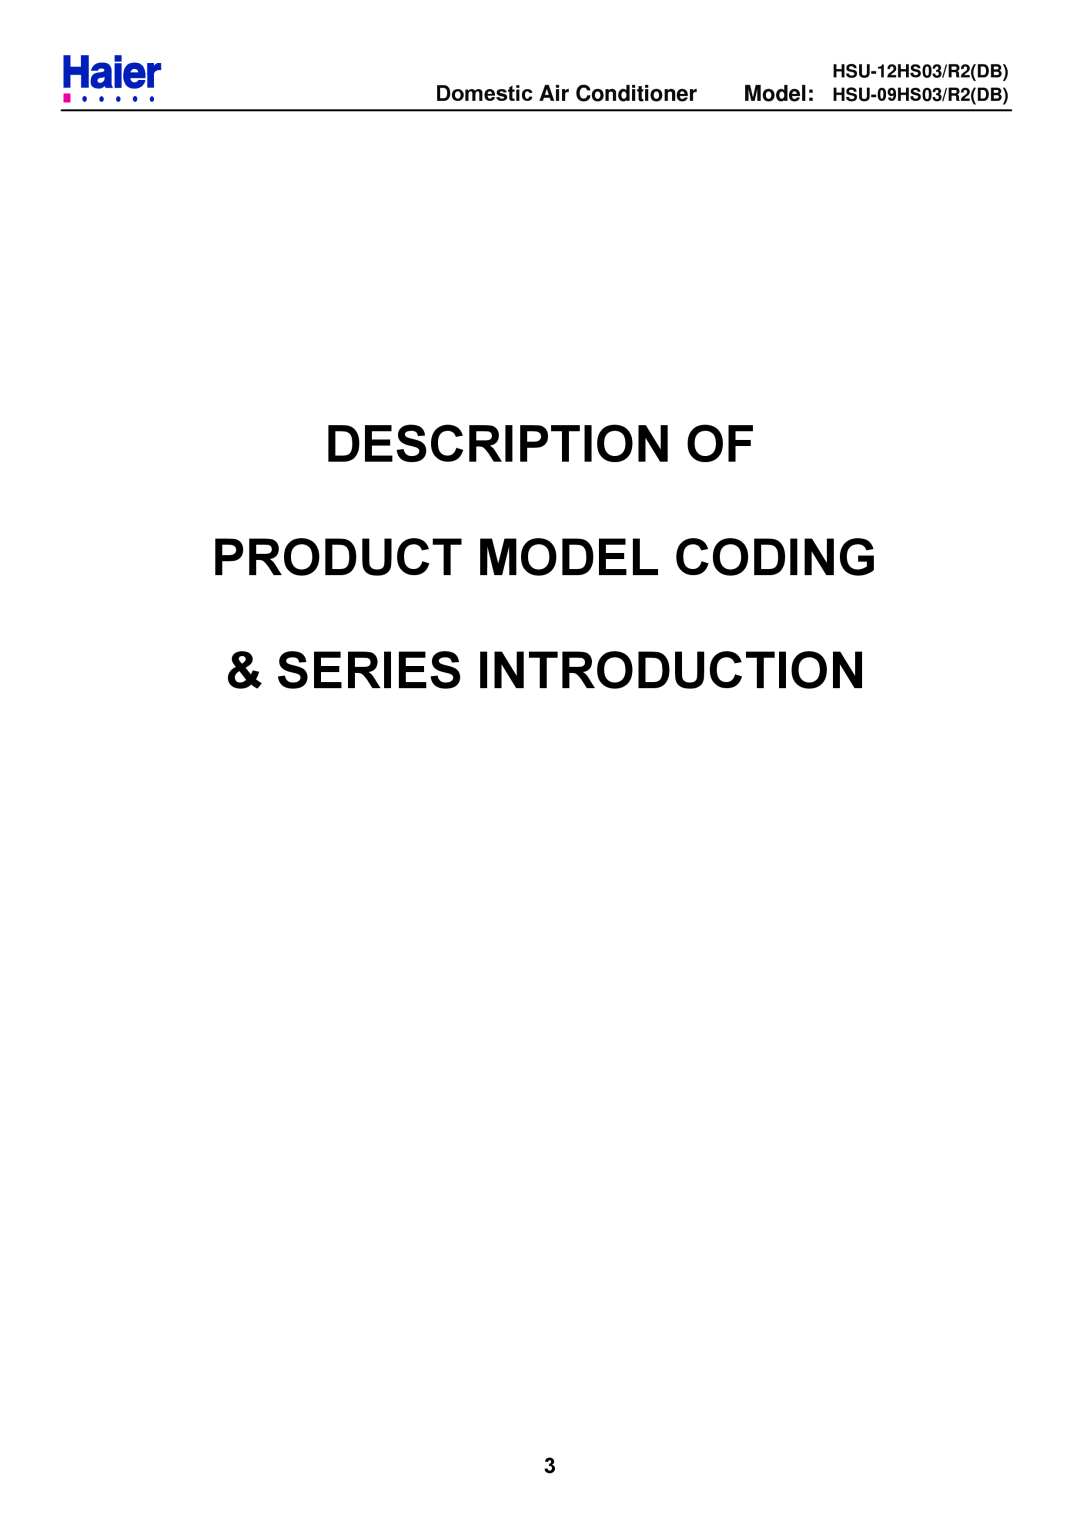 Haier HSU-12HS03/R2DB, HSU-09HS03/R2DB Description Of Product Model Coding Series Introduction, Domestic Air Conditioner 